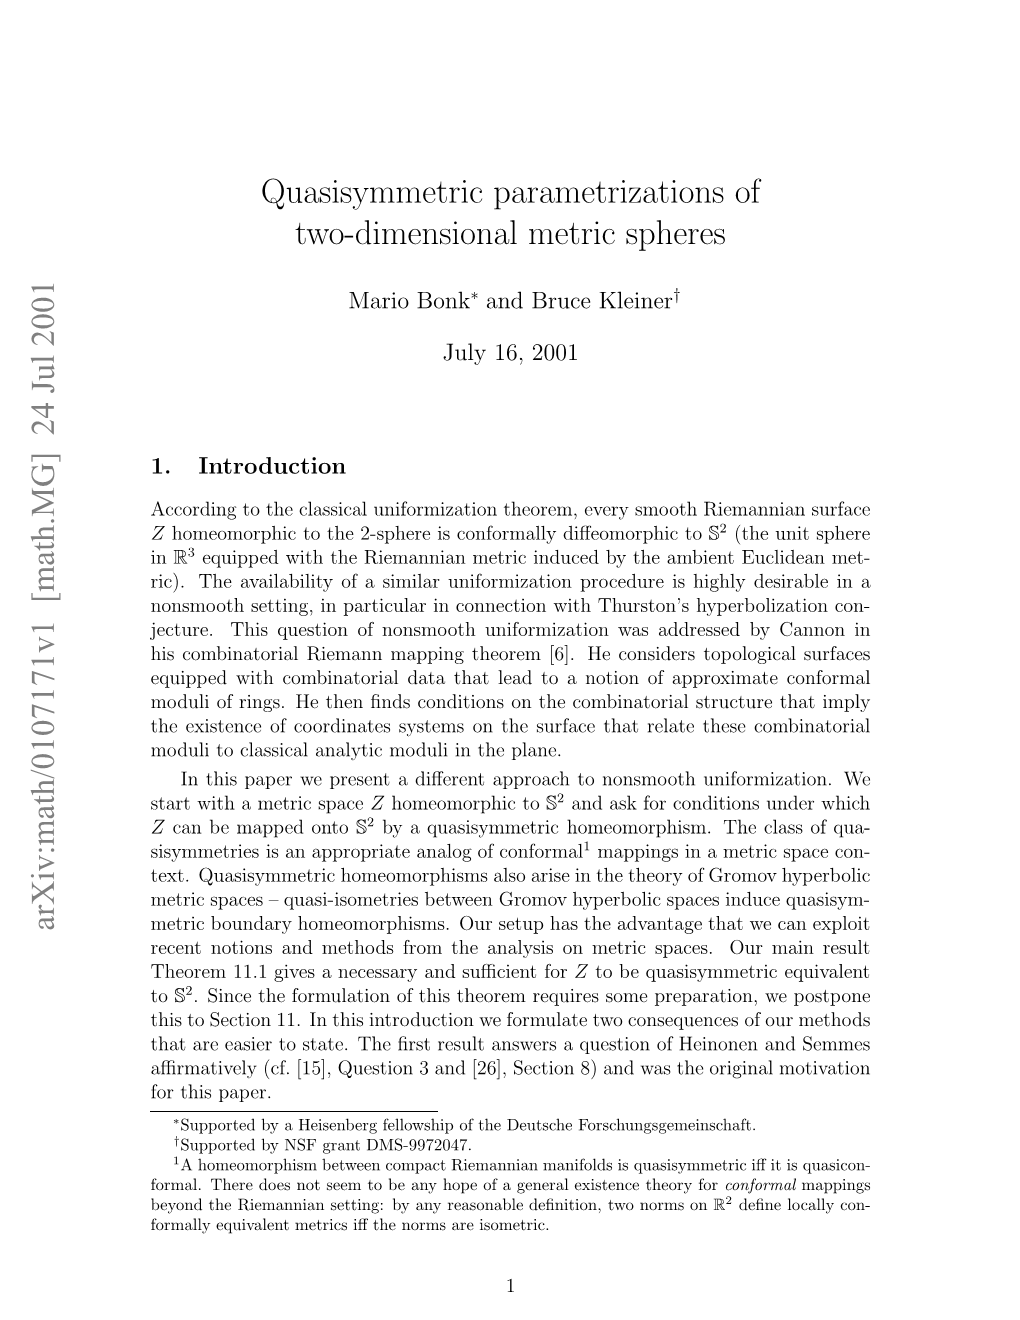 Quasisymmetric Parametrizations of Two-Dimensional Metric Spheres